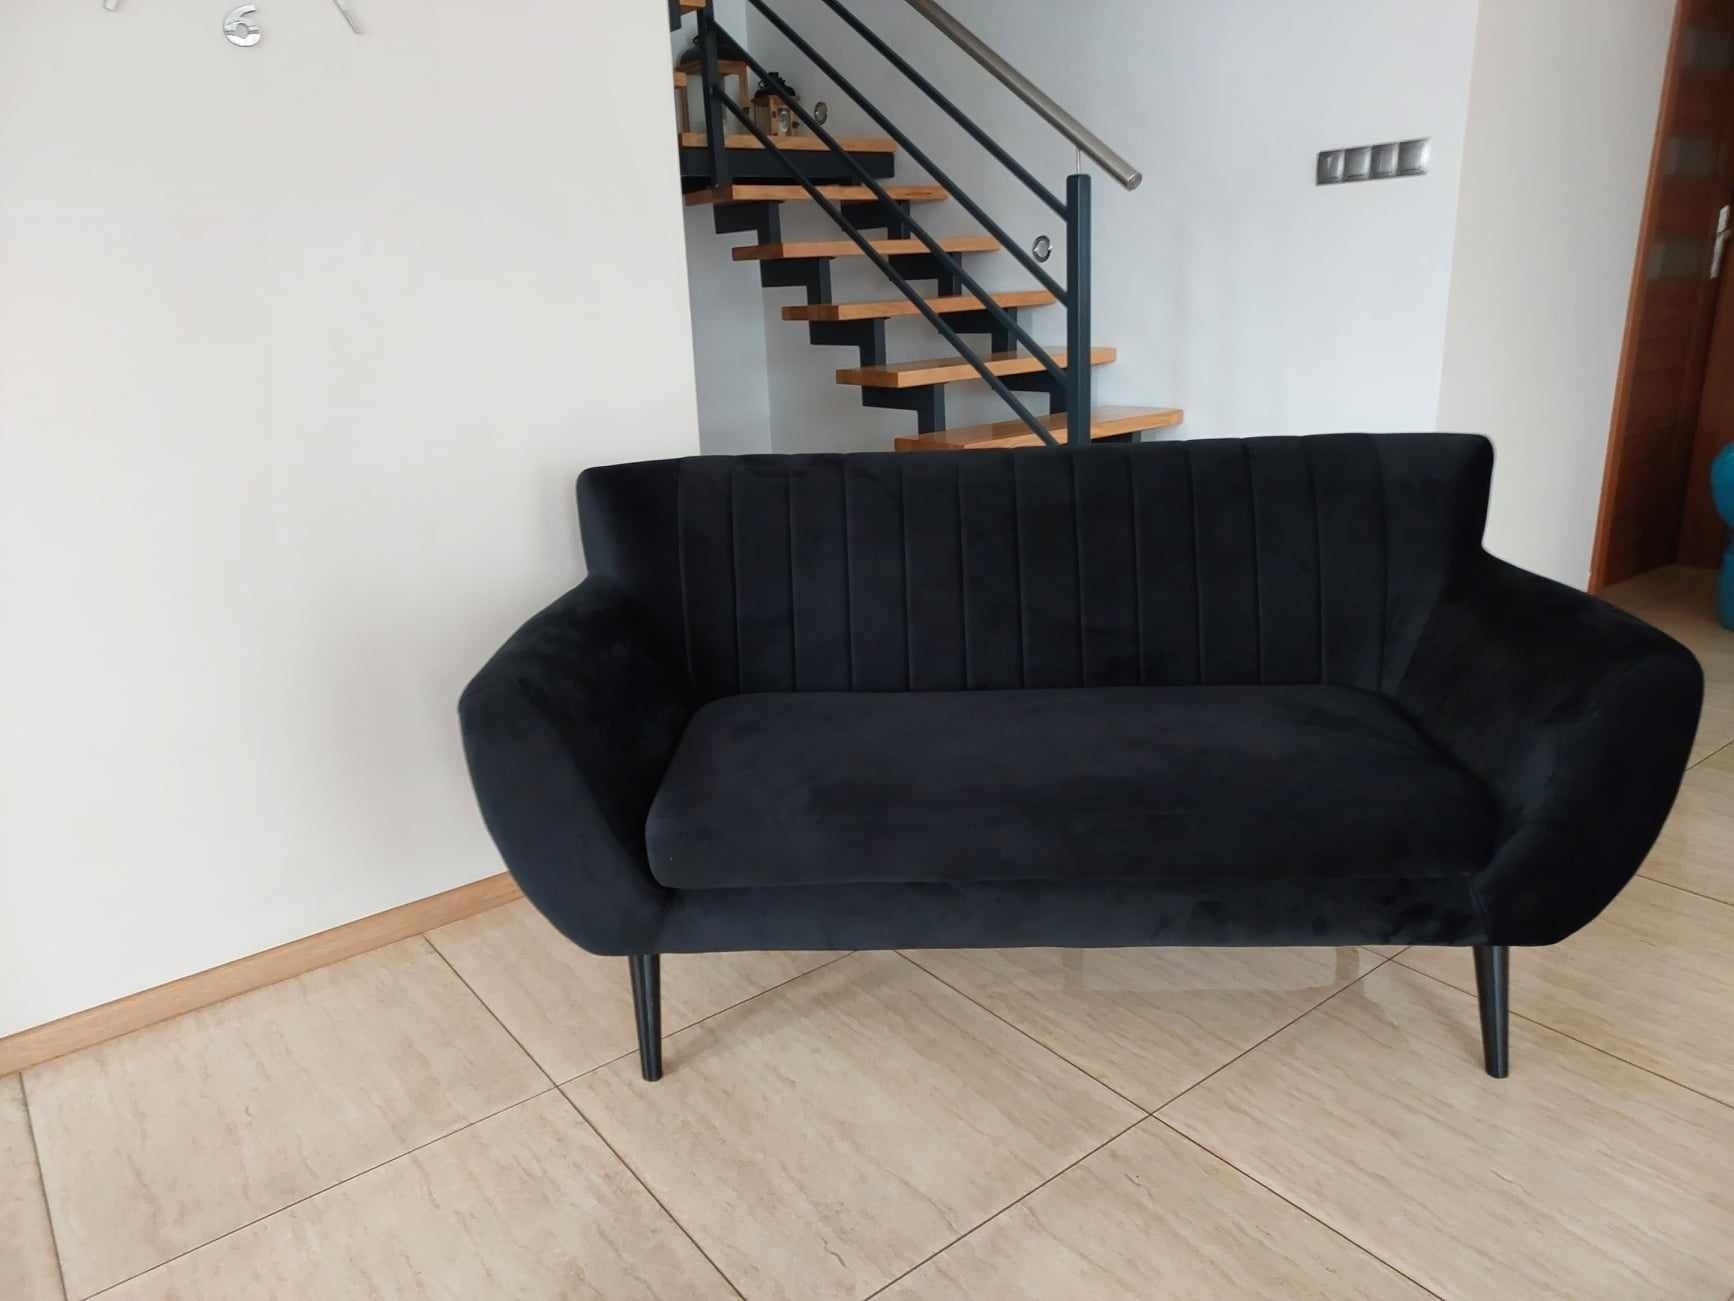 PERUGIA -2 OSOBOWA 

Elegancka i wygodna sofa ,wykonana n